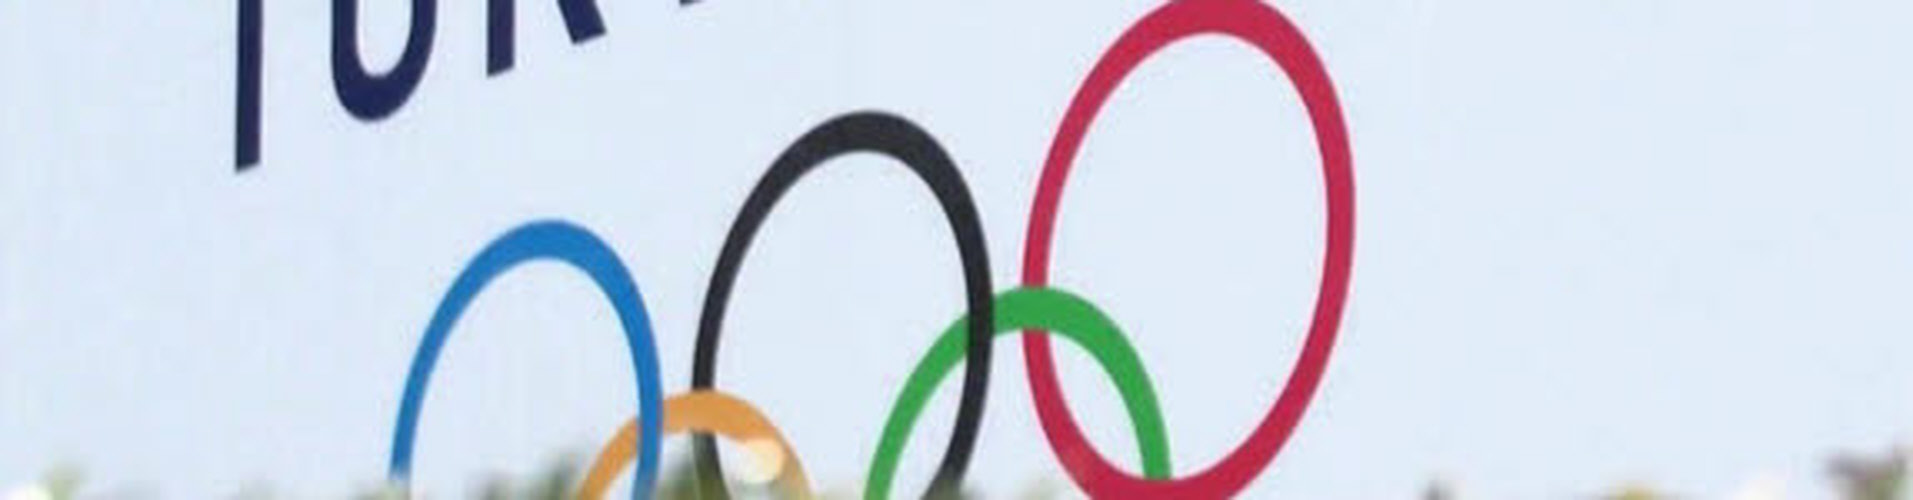 Olimpic Games Tokyo